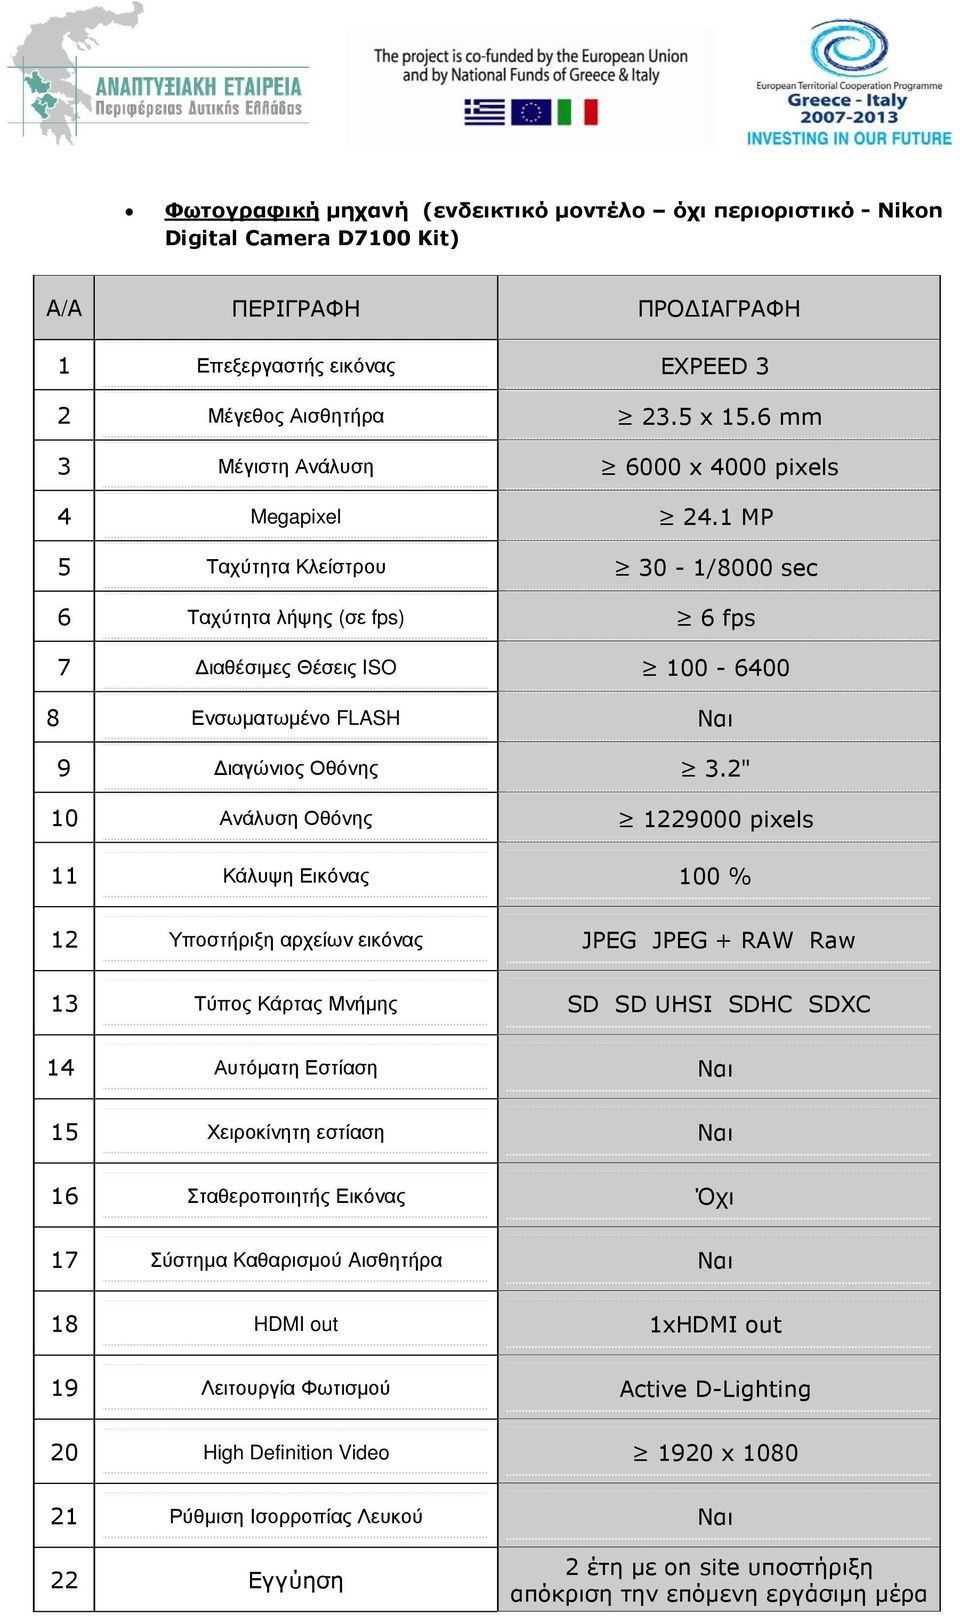 1 MP 5 Ταχύτητα Κλείστρου 30-1/8000 sec 6 Ταχύτητα λήψης (σε fps) 6 fps 7 ιαθέσιµες Θέσεις ISO 100-6400 8 Ενσωµατωµένο FLASH Ναι 9 ιαγώνιος Οθόνης 3.